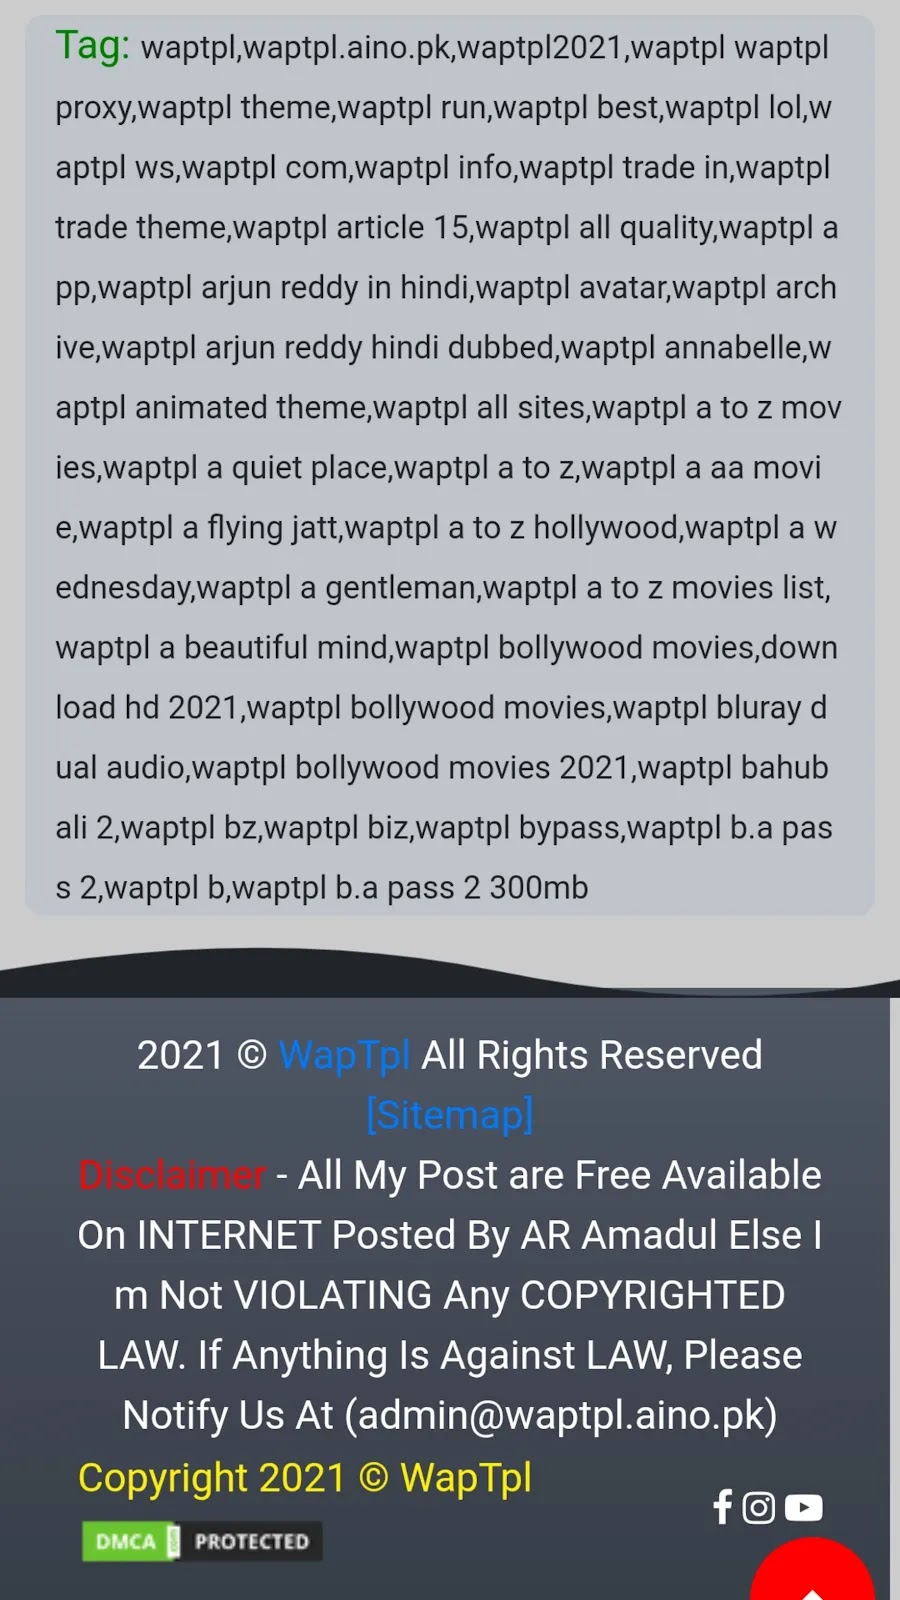 WapTpl Wapkiz Movie Download Premium Theme